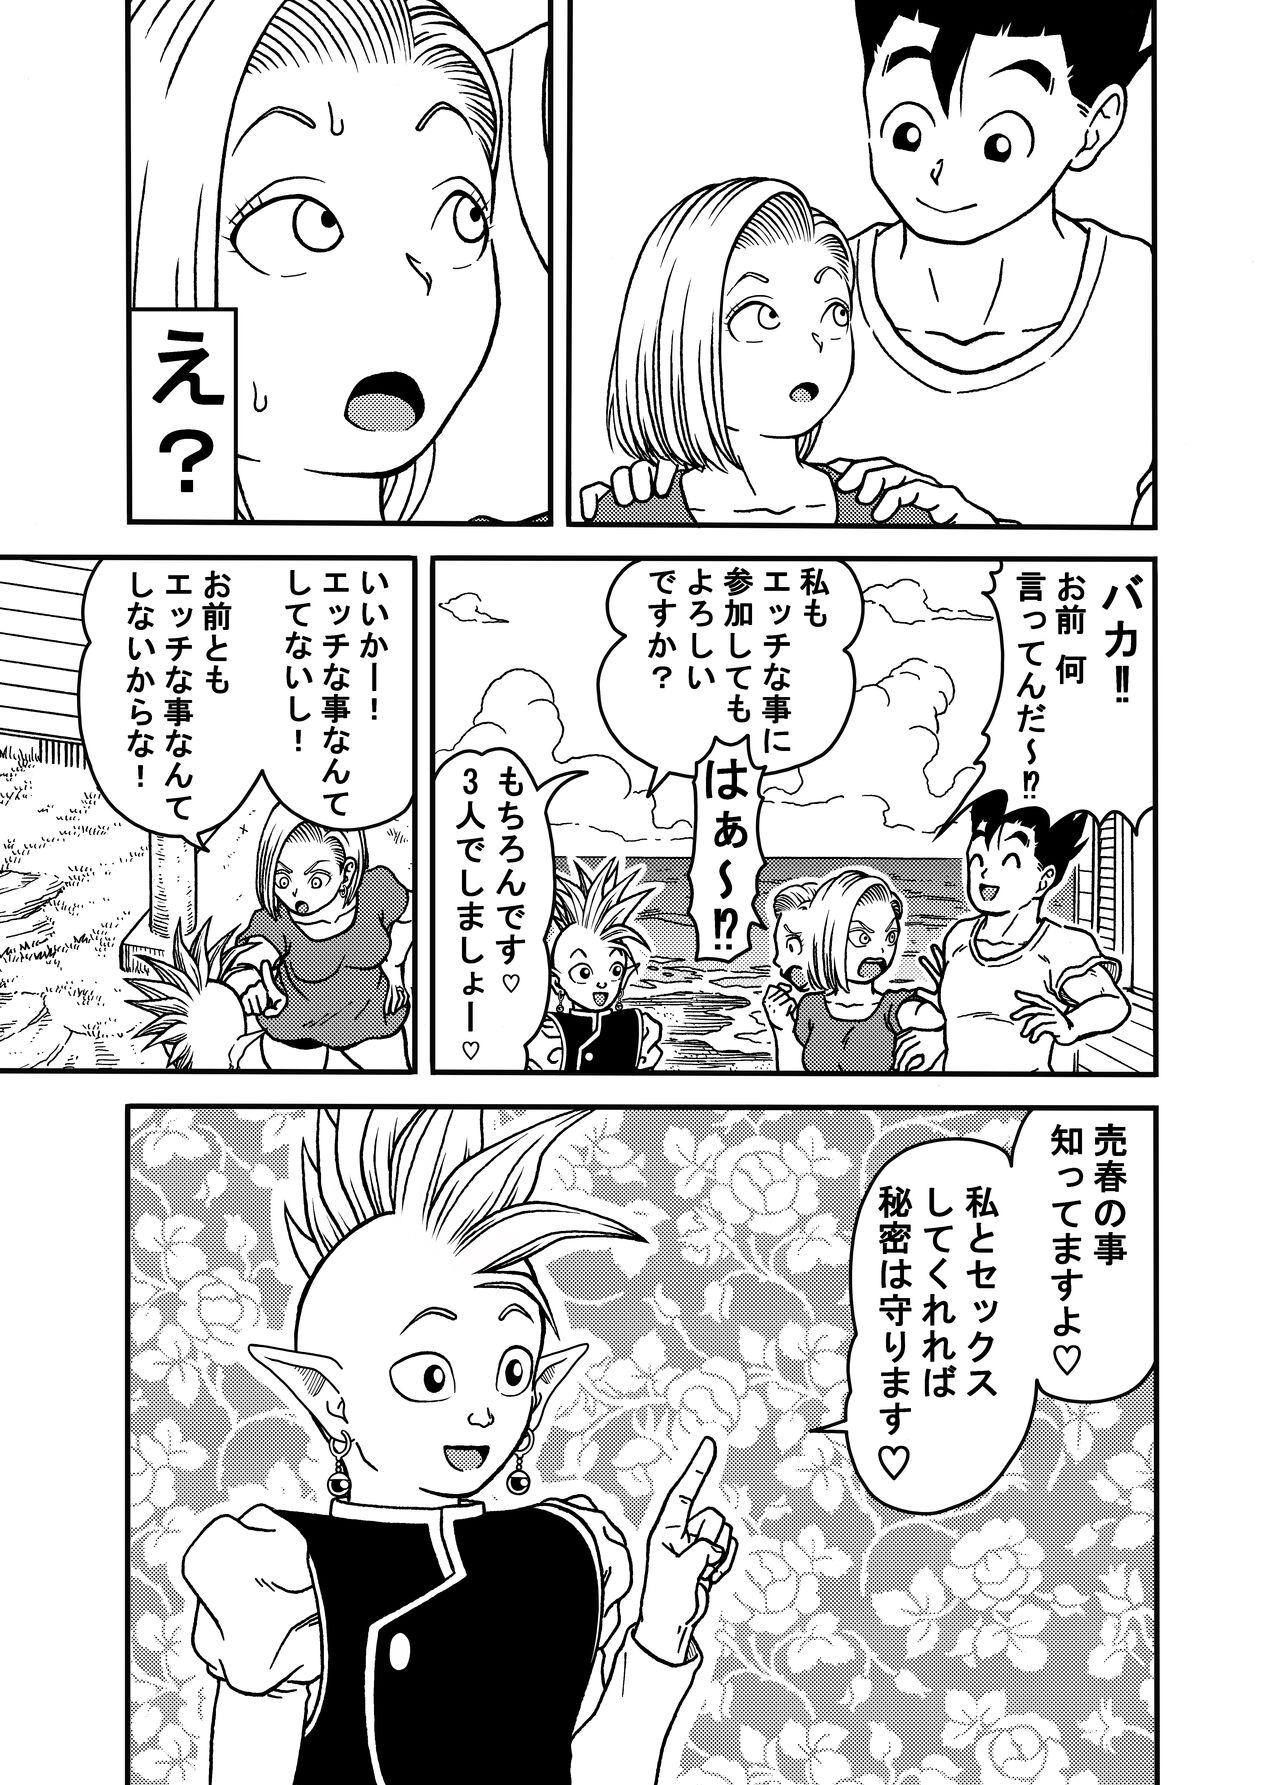 Jock 18-gou NTR Nakadashi on Parade 5 - Dragon ball z This - Page 9